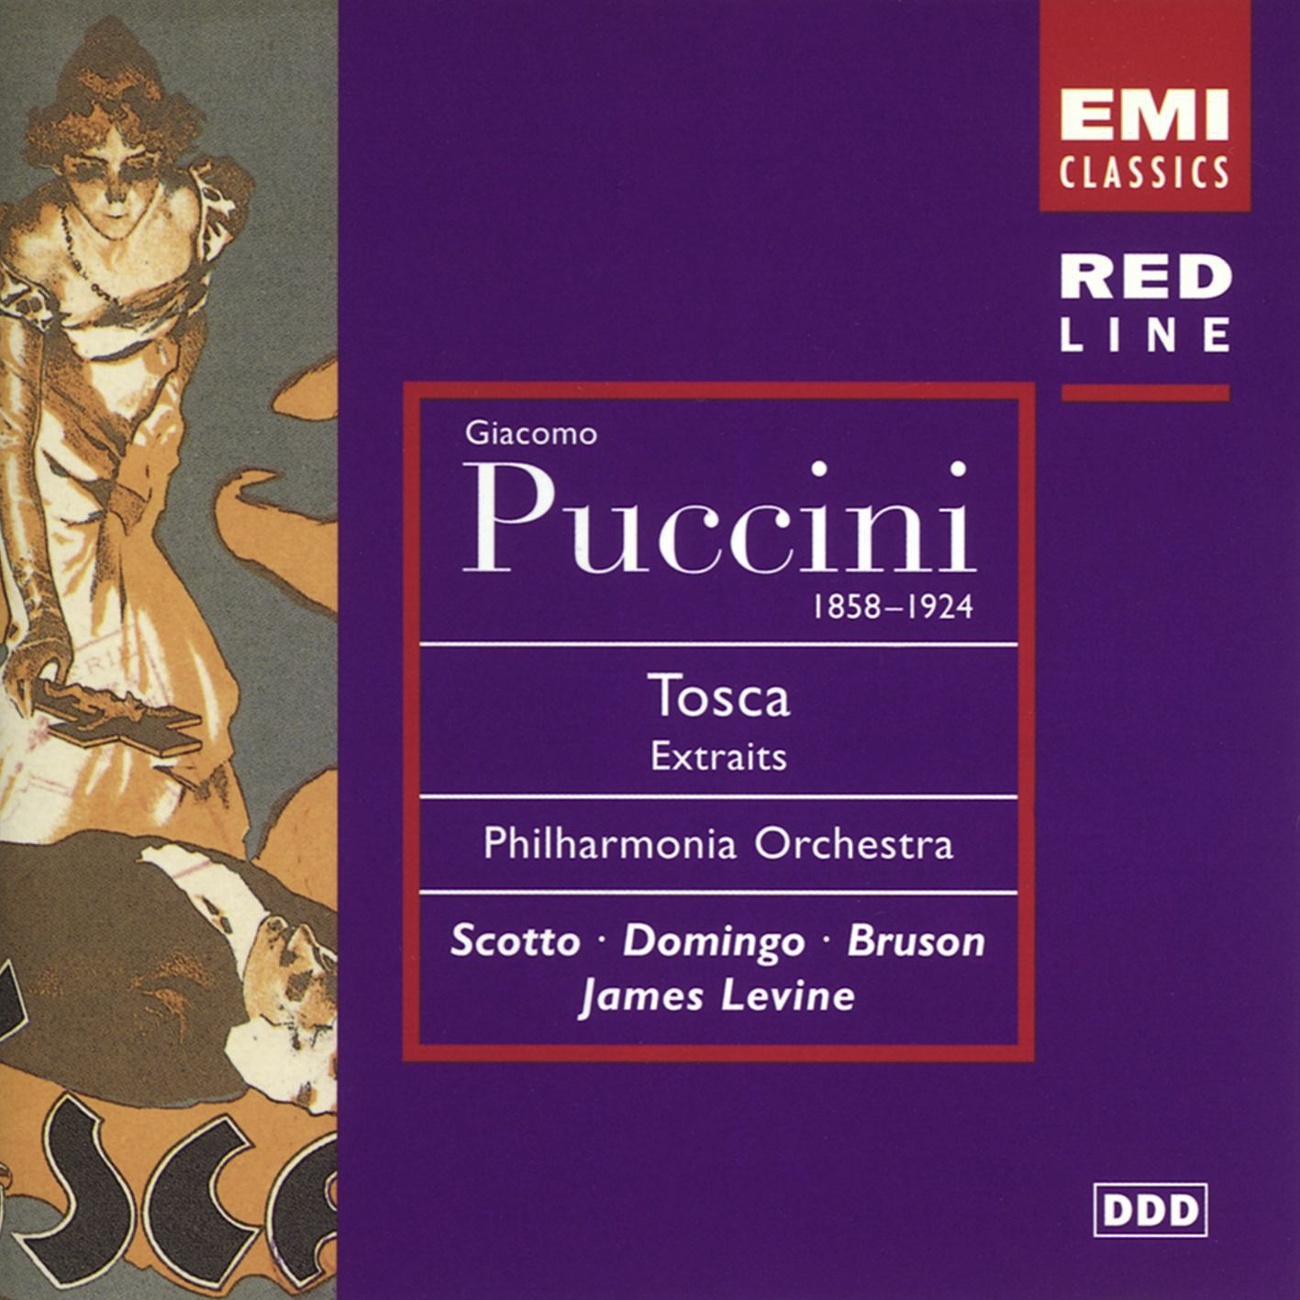 Tosca - Opera in three acts (1997 Digital Remaster), Act I: Dammi i colori...Recondita armonia (Cavaradossi, Sacristan)